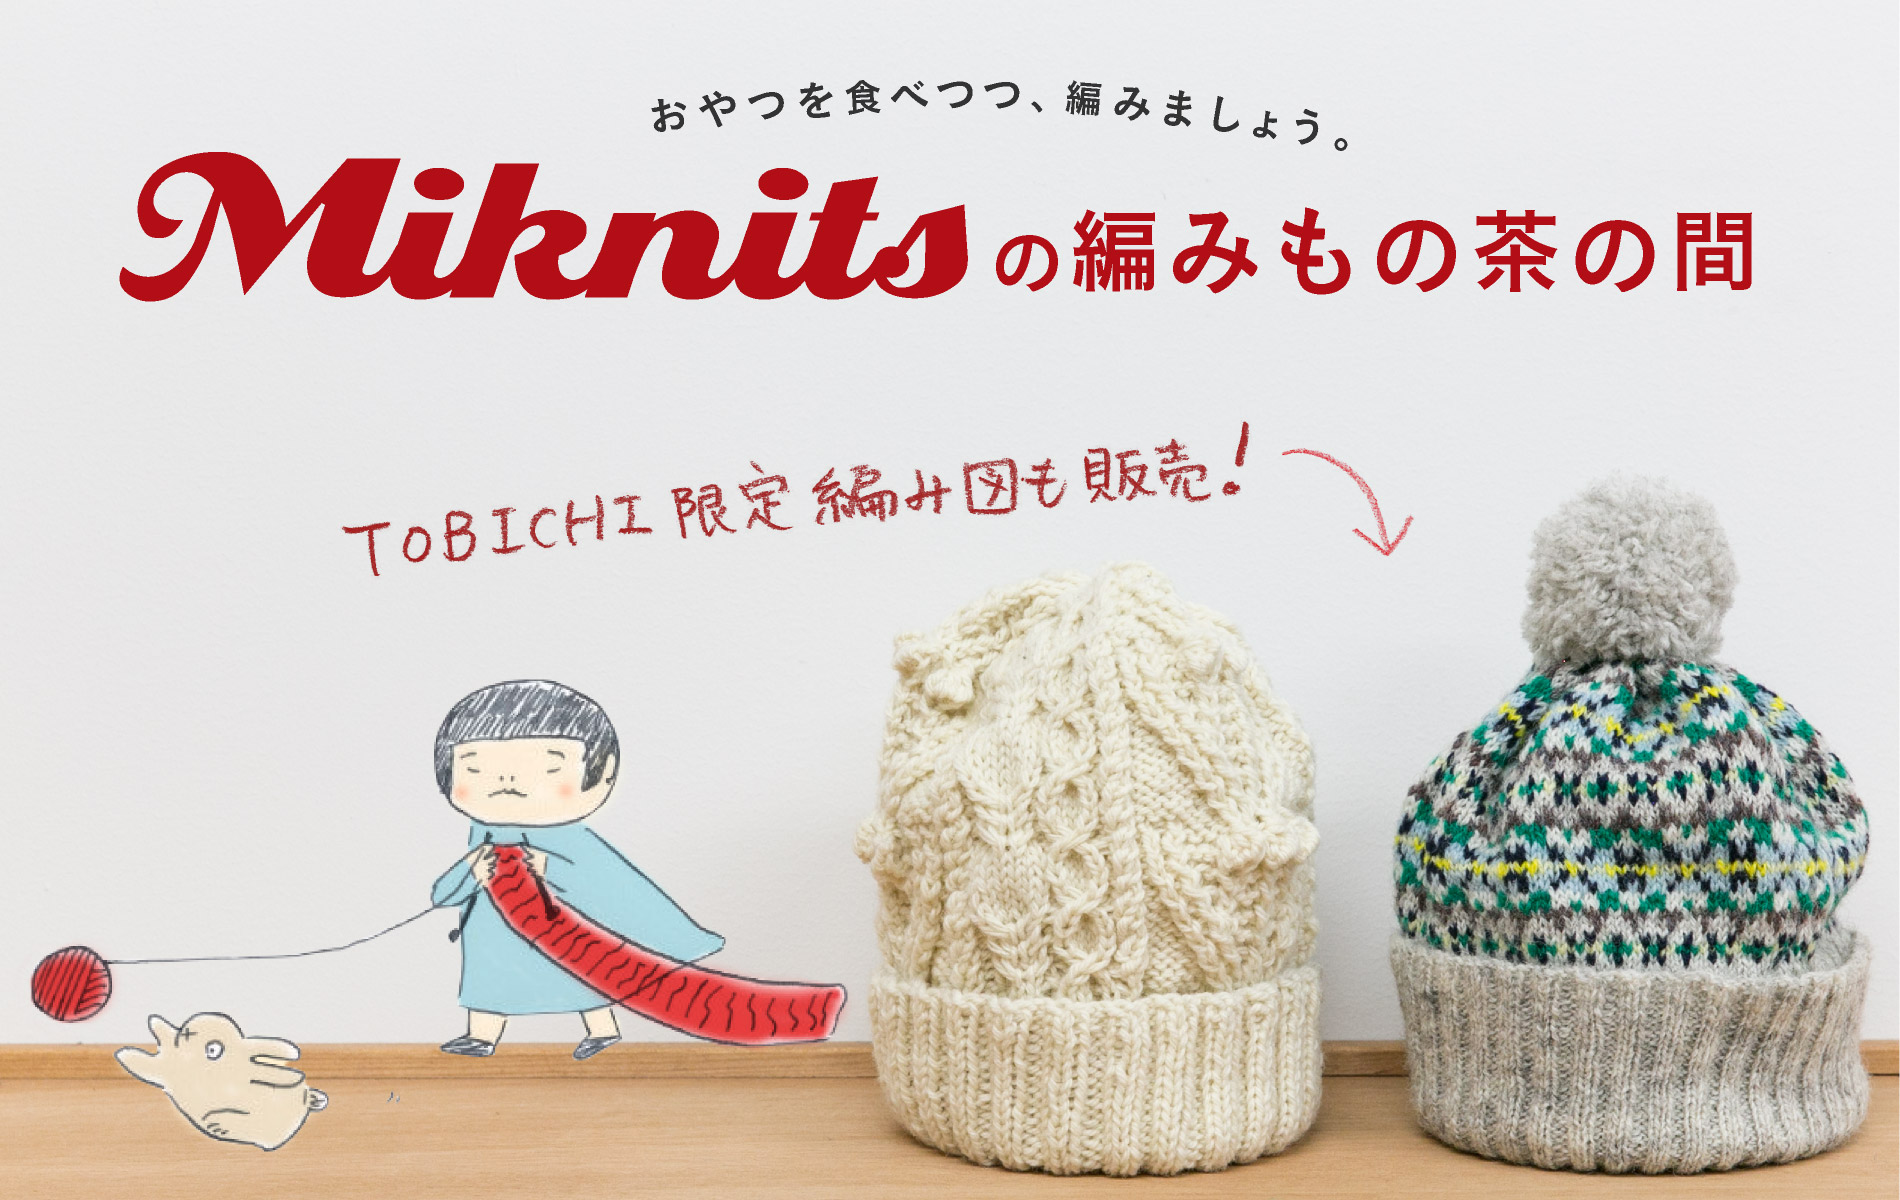 Miknitsの編みもの茶の間

おやつを食べつつ、編みましょう。

TOBICHI限定編み図も販売！